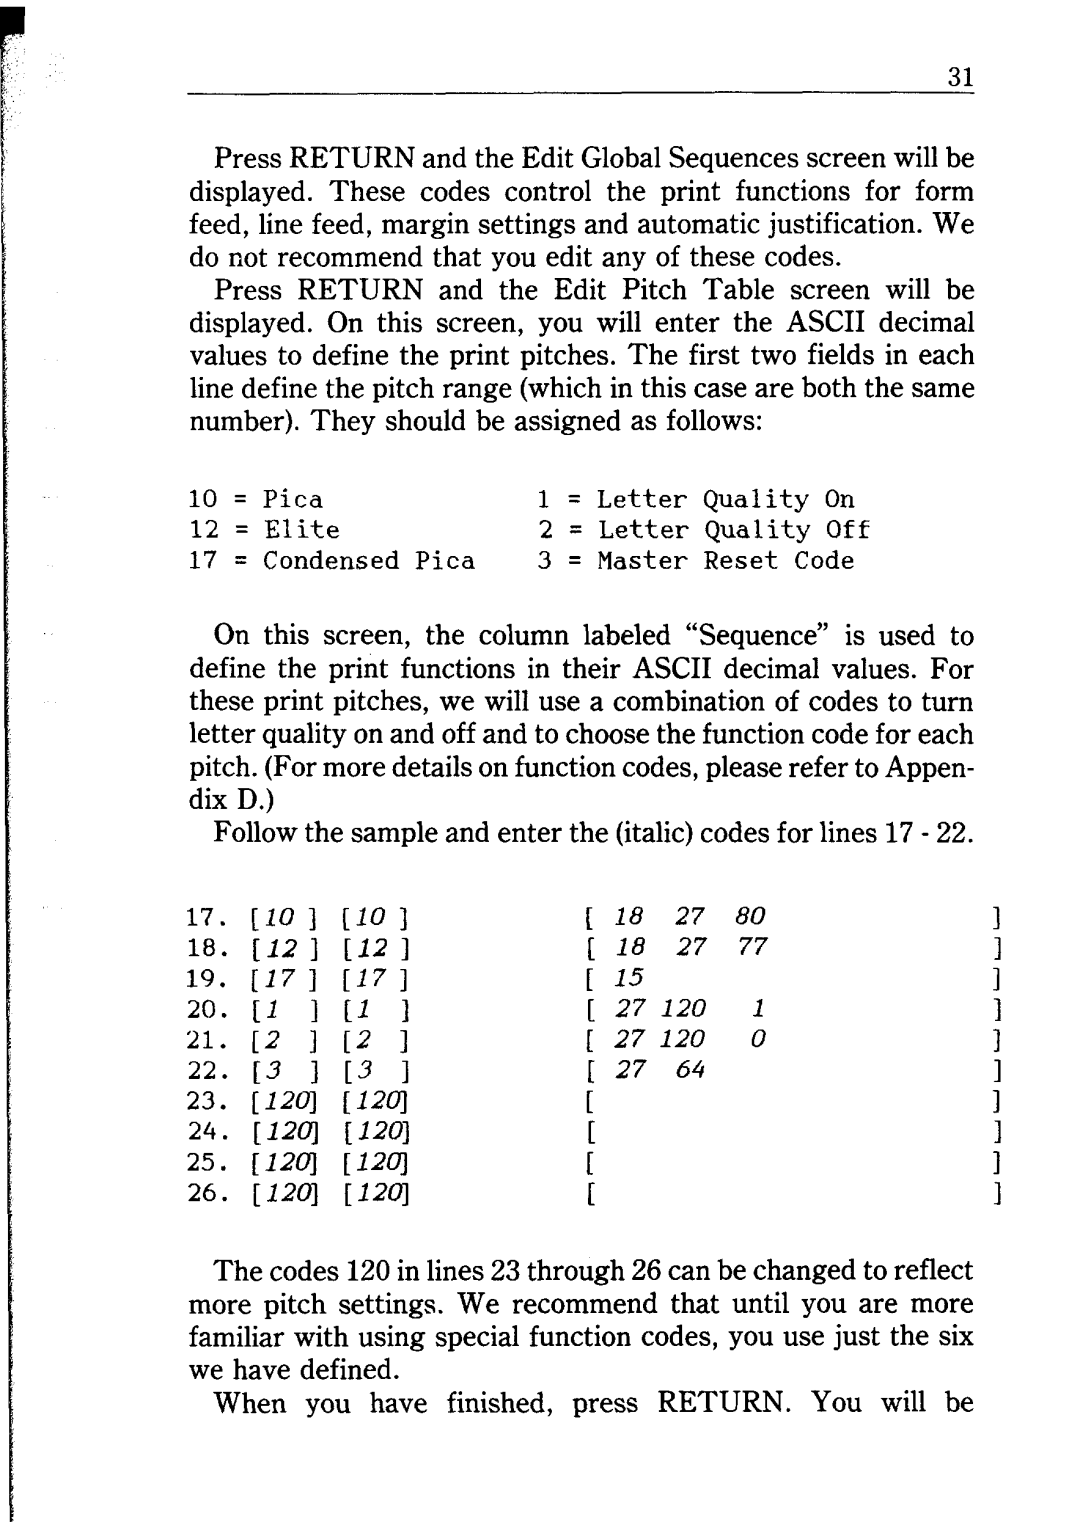 Star Micronics NB24-10/15 user manual El201 